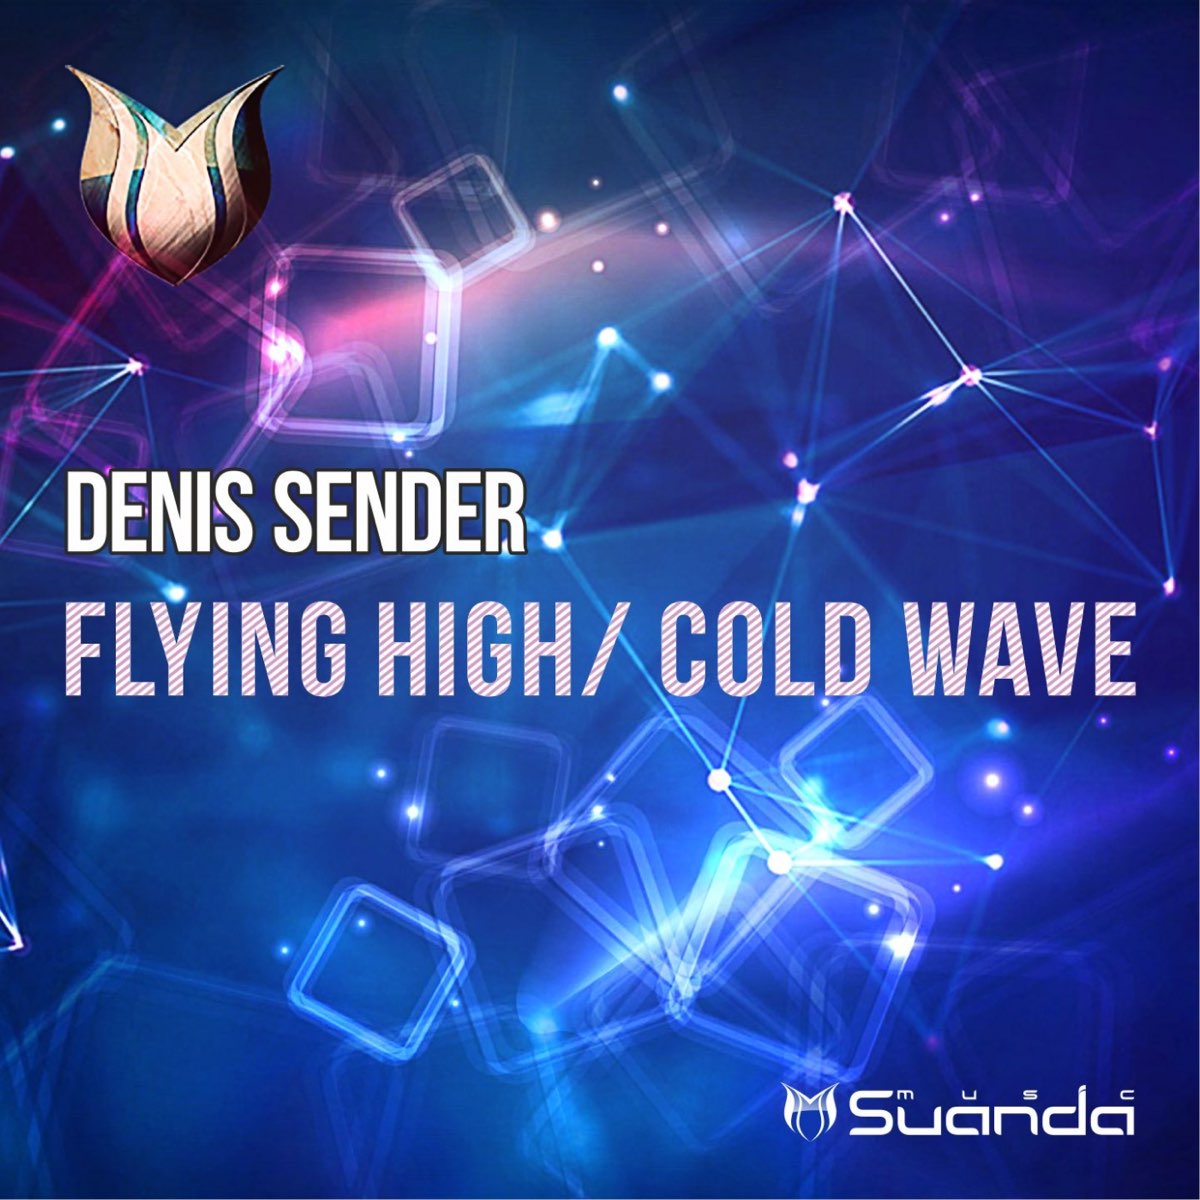 Flying higher and higher. Denis Wave. Flying High. Denis Sender what is next (Extended Mix). Delair sense of Spring (Denis Sender Remix).